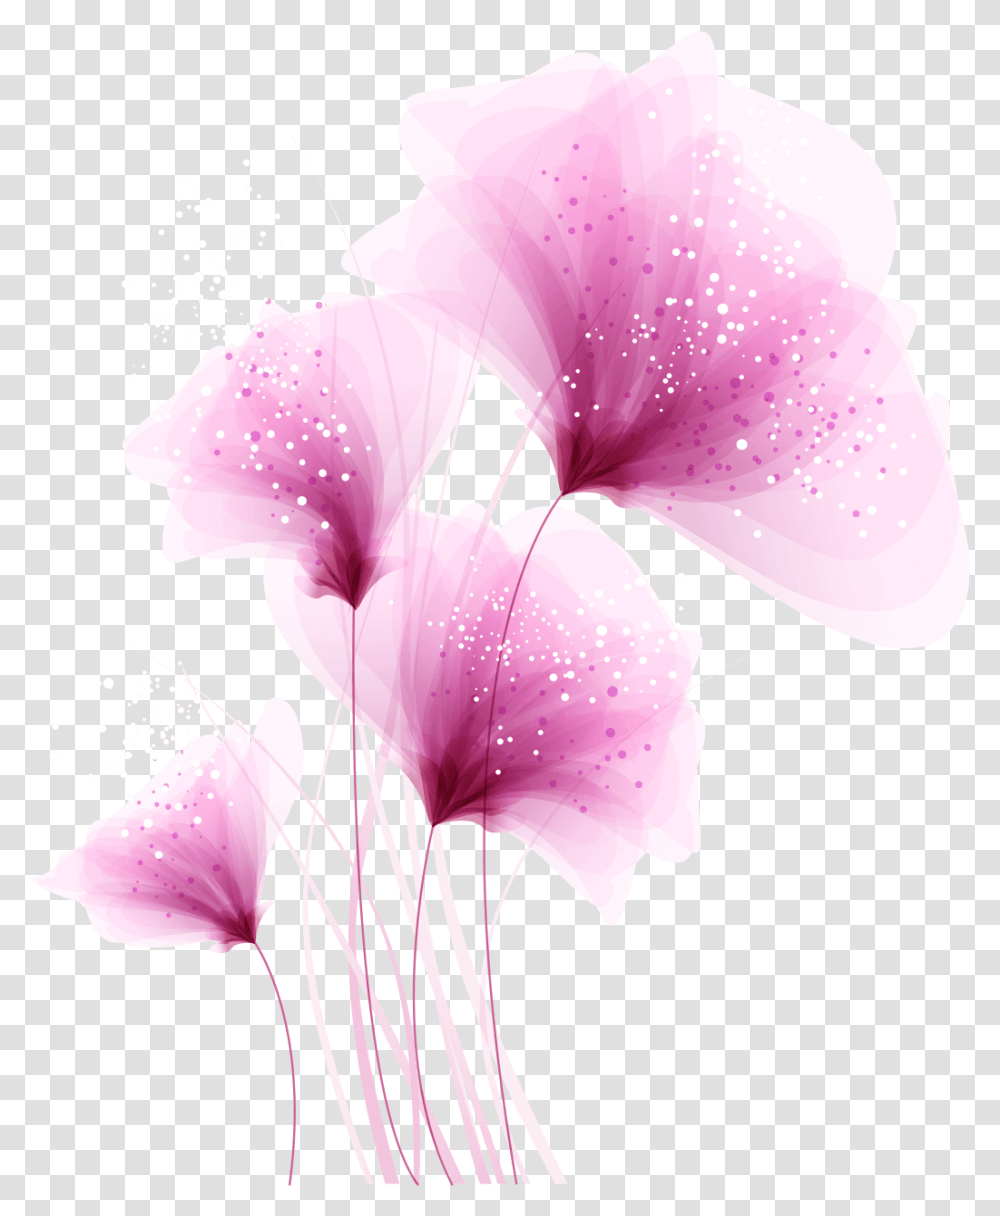 Pink Flower Image Free Download Lily, Plant, Petal, Blossom, Geranium Transparent Png